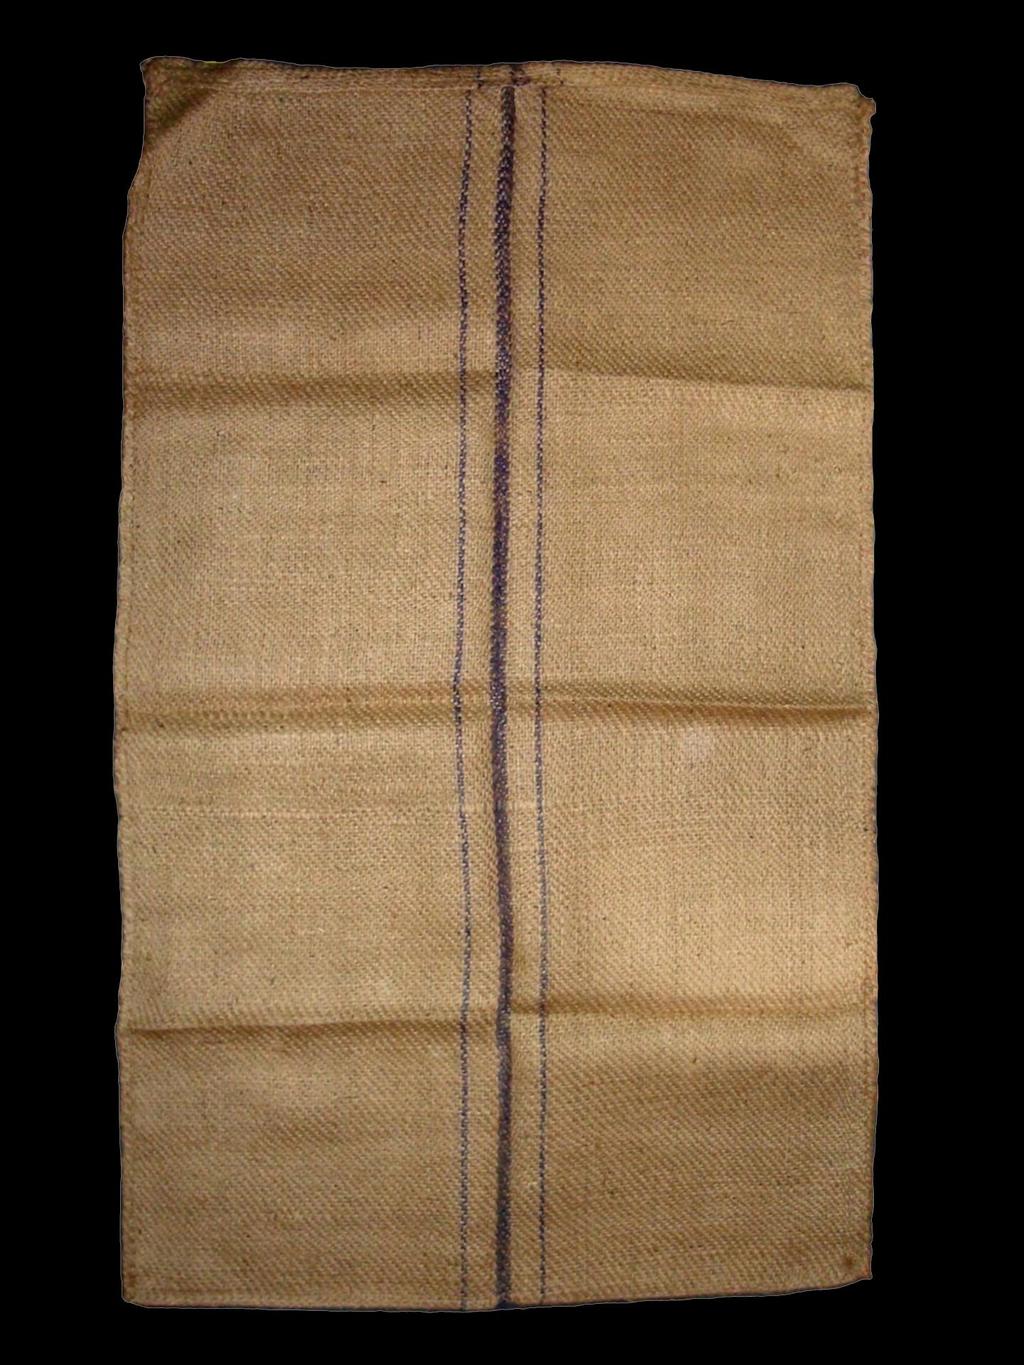 Bangladesh Jute Bag B. Twill Bag Size : 112 cm 68 cm (44 26.5 ) Weight : 1020 gram (2.